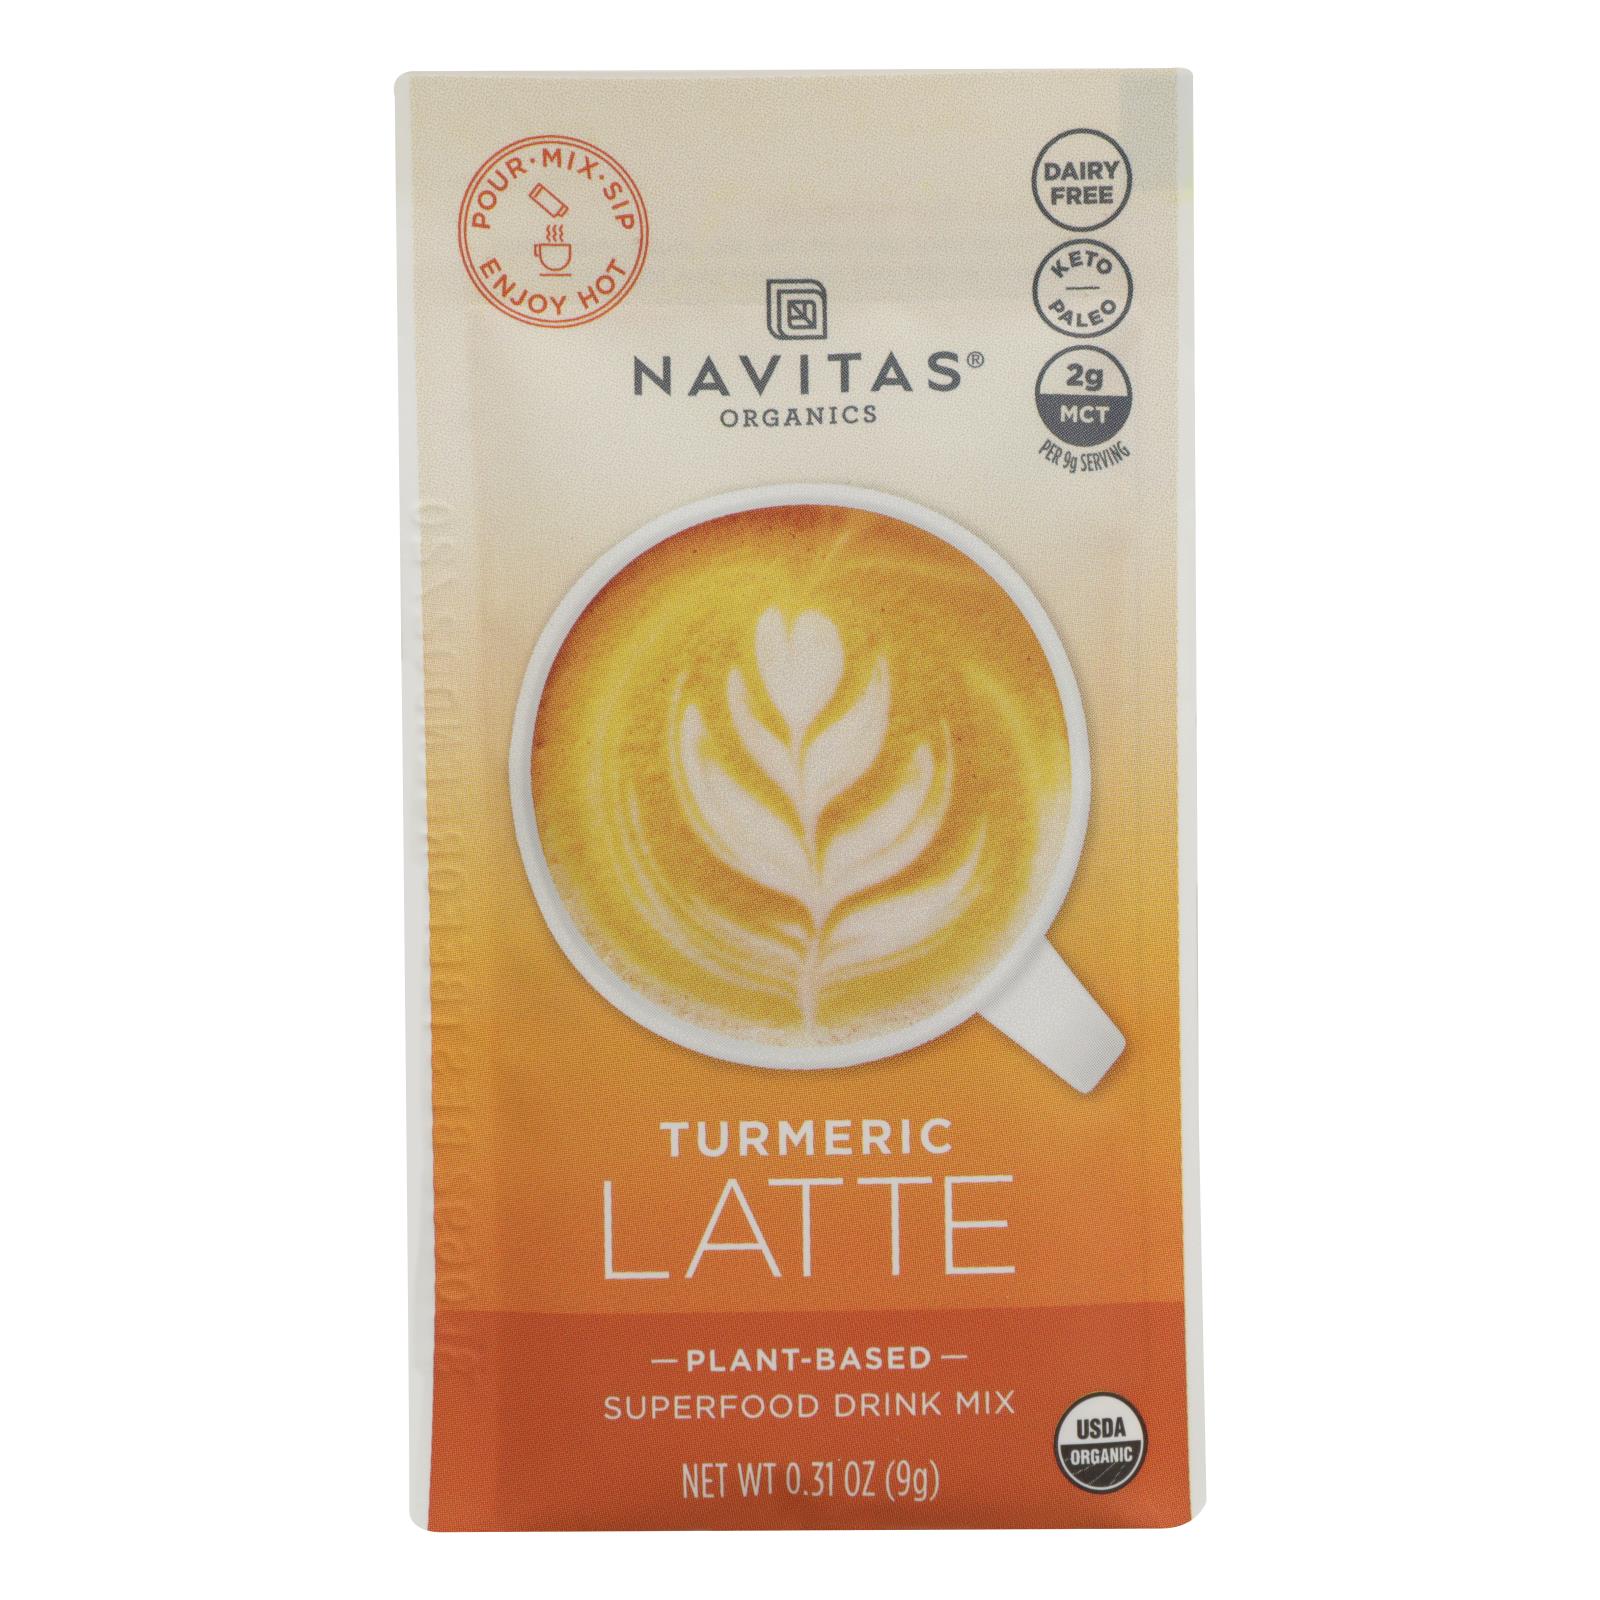 Navitas Organics - Latte Turmeric - 10개 묶음상품 - 0.31 OZ